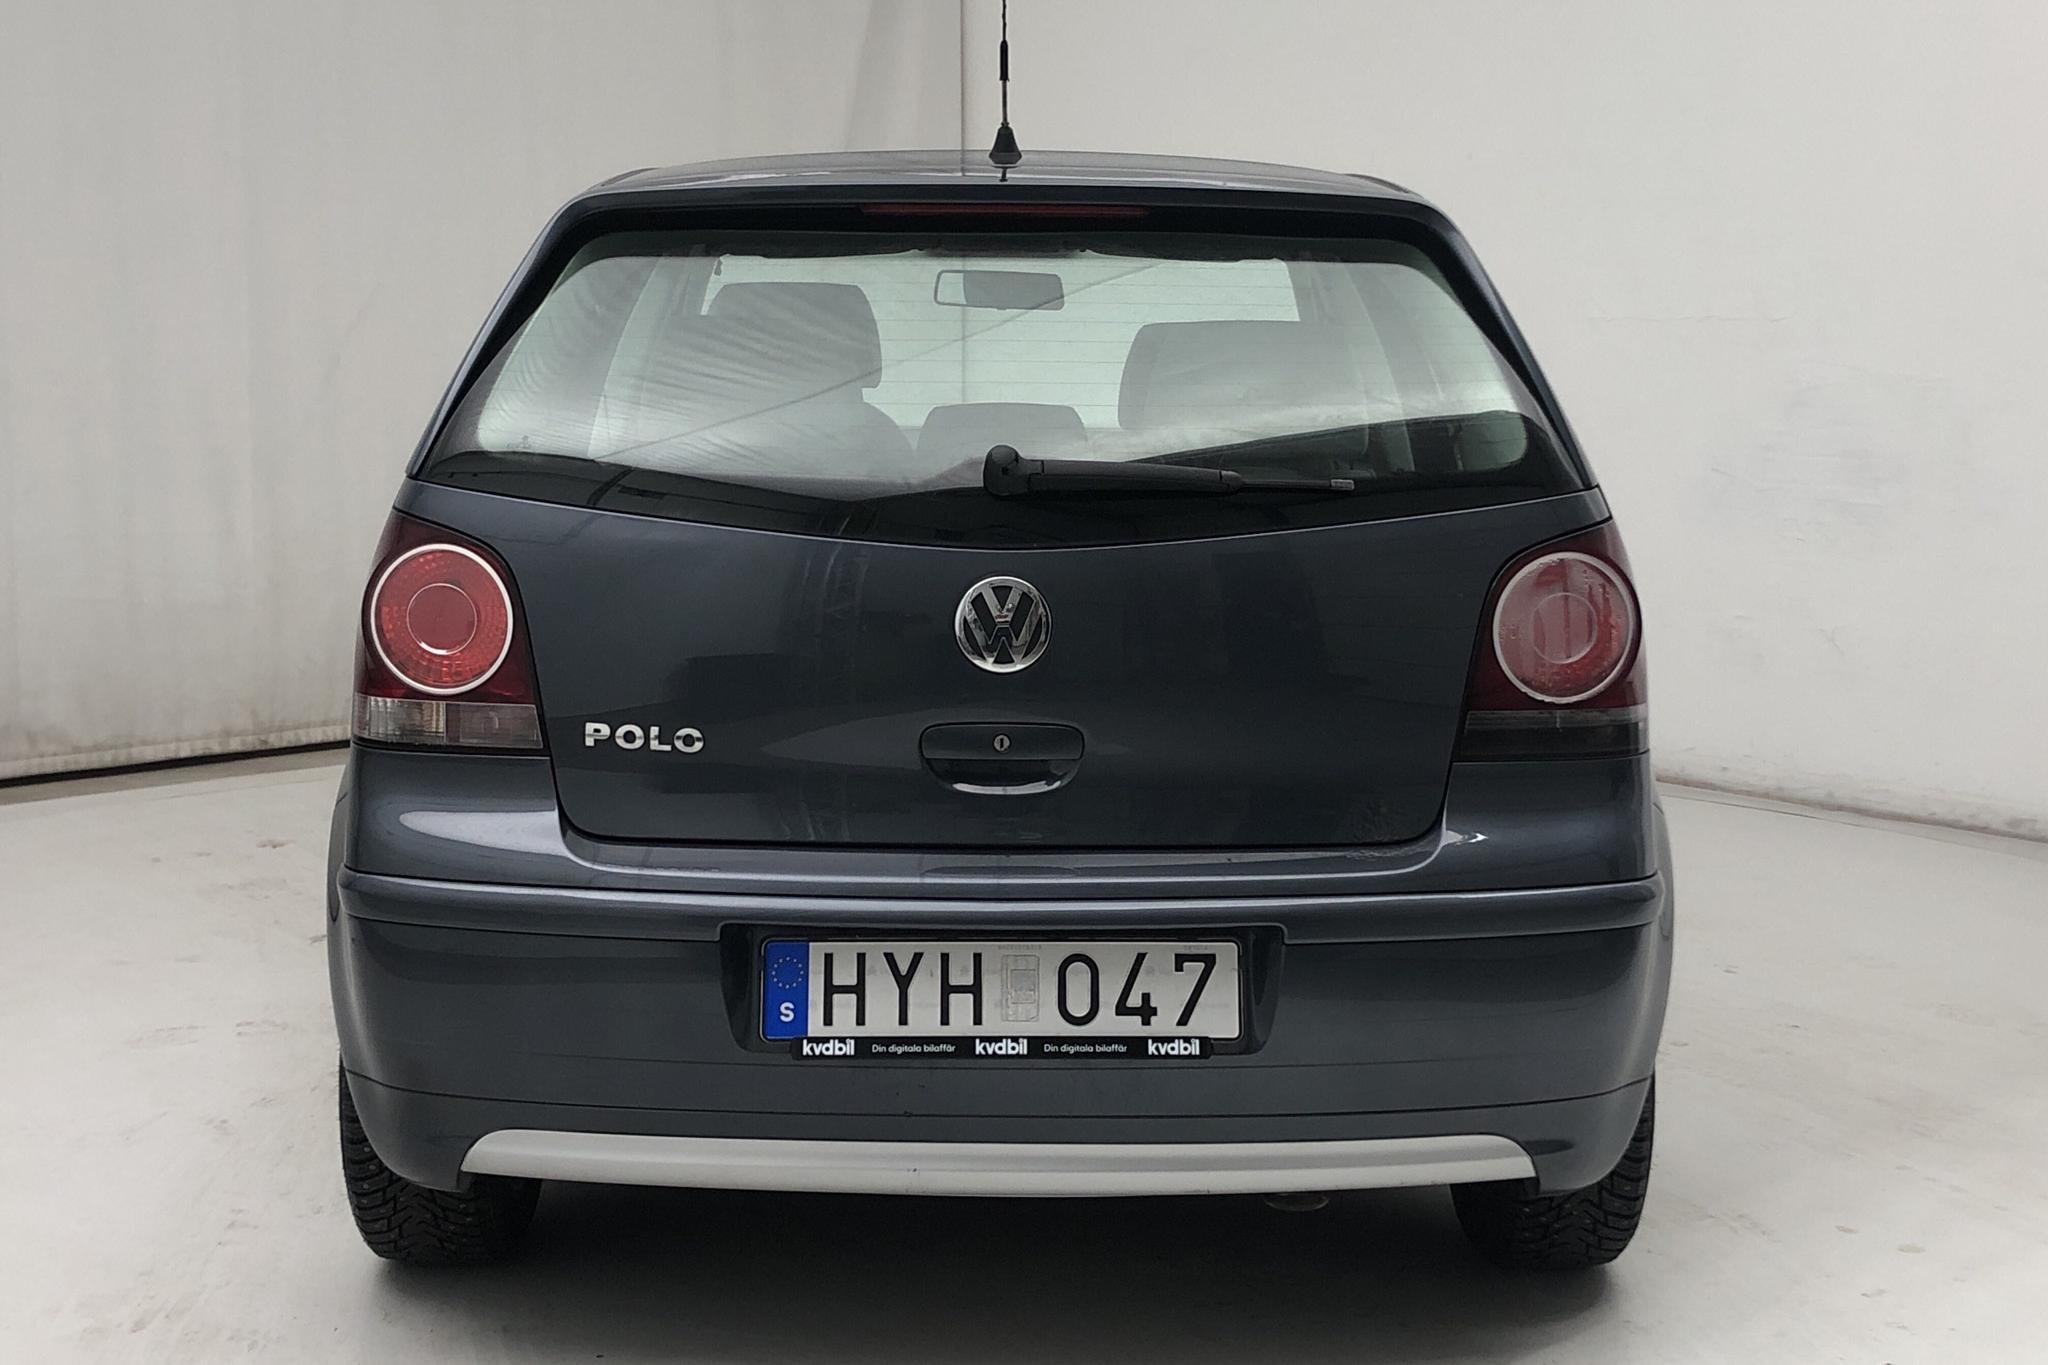 VW Polo 1.4 TDI BlueMotion 5dr (80hk) - 100 460 km - Manual - Dark Grey - 2009